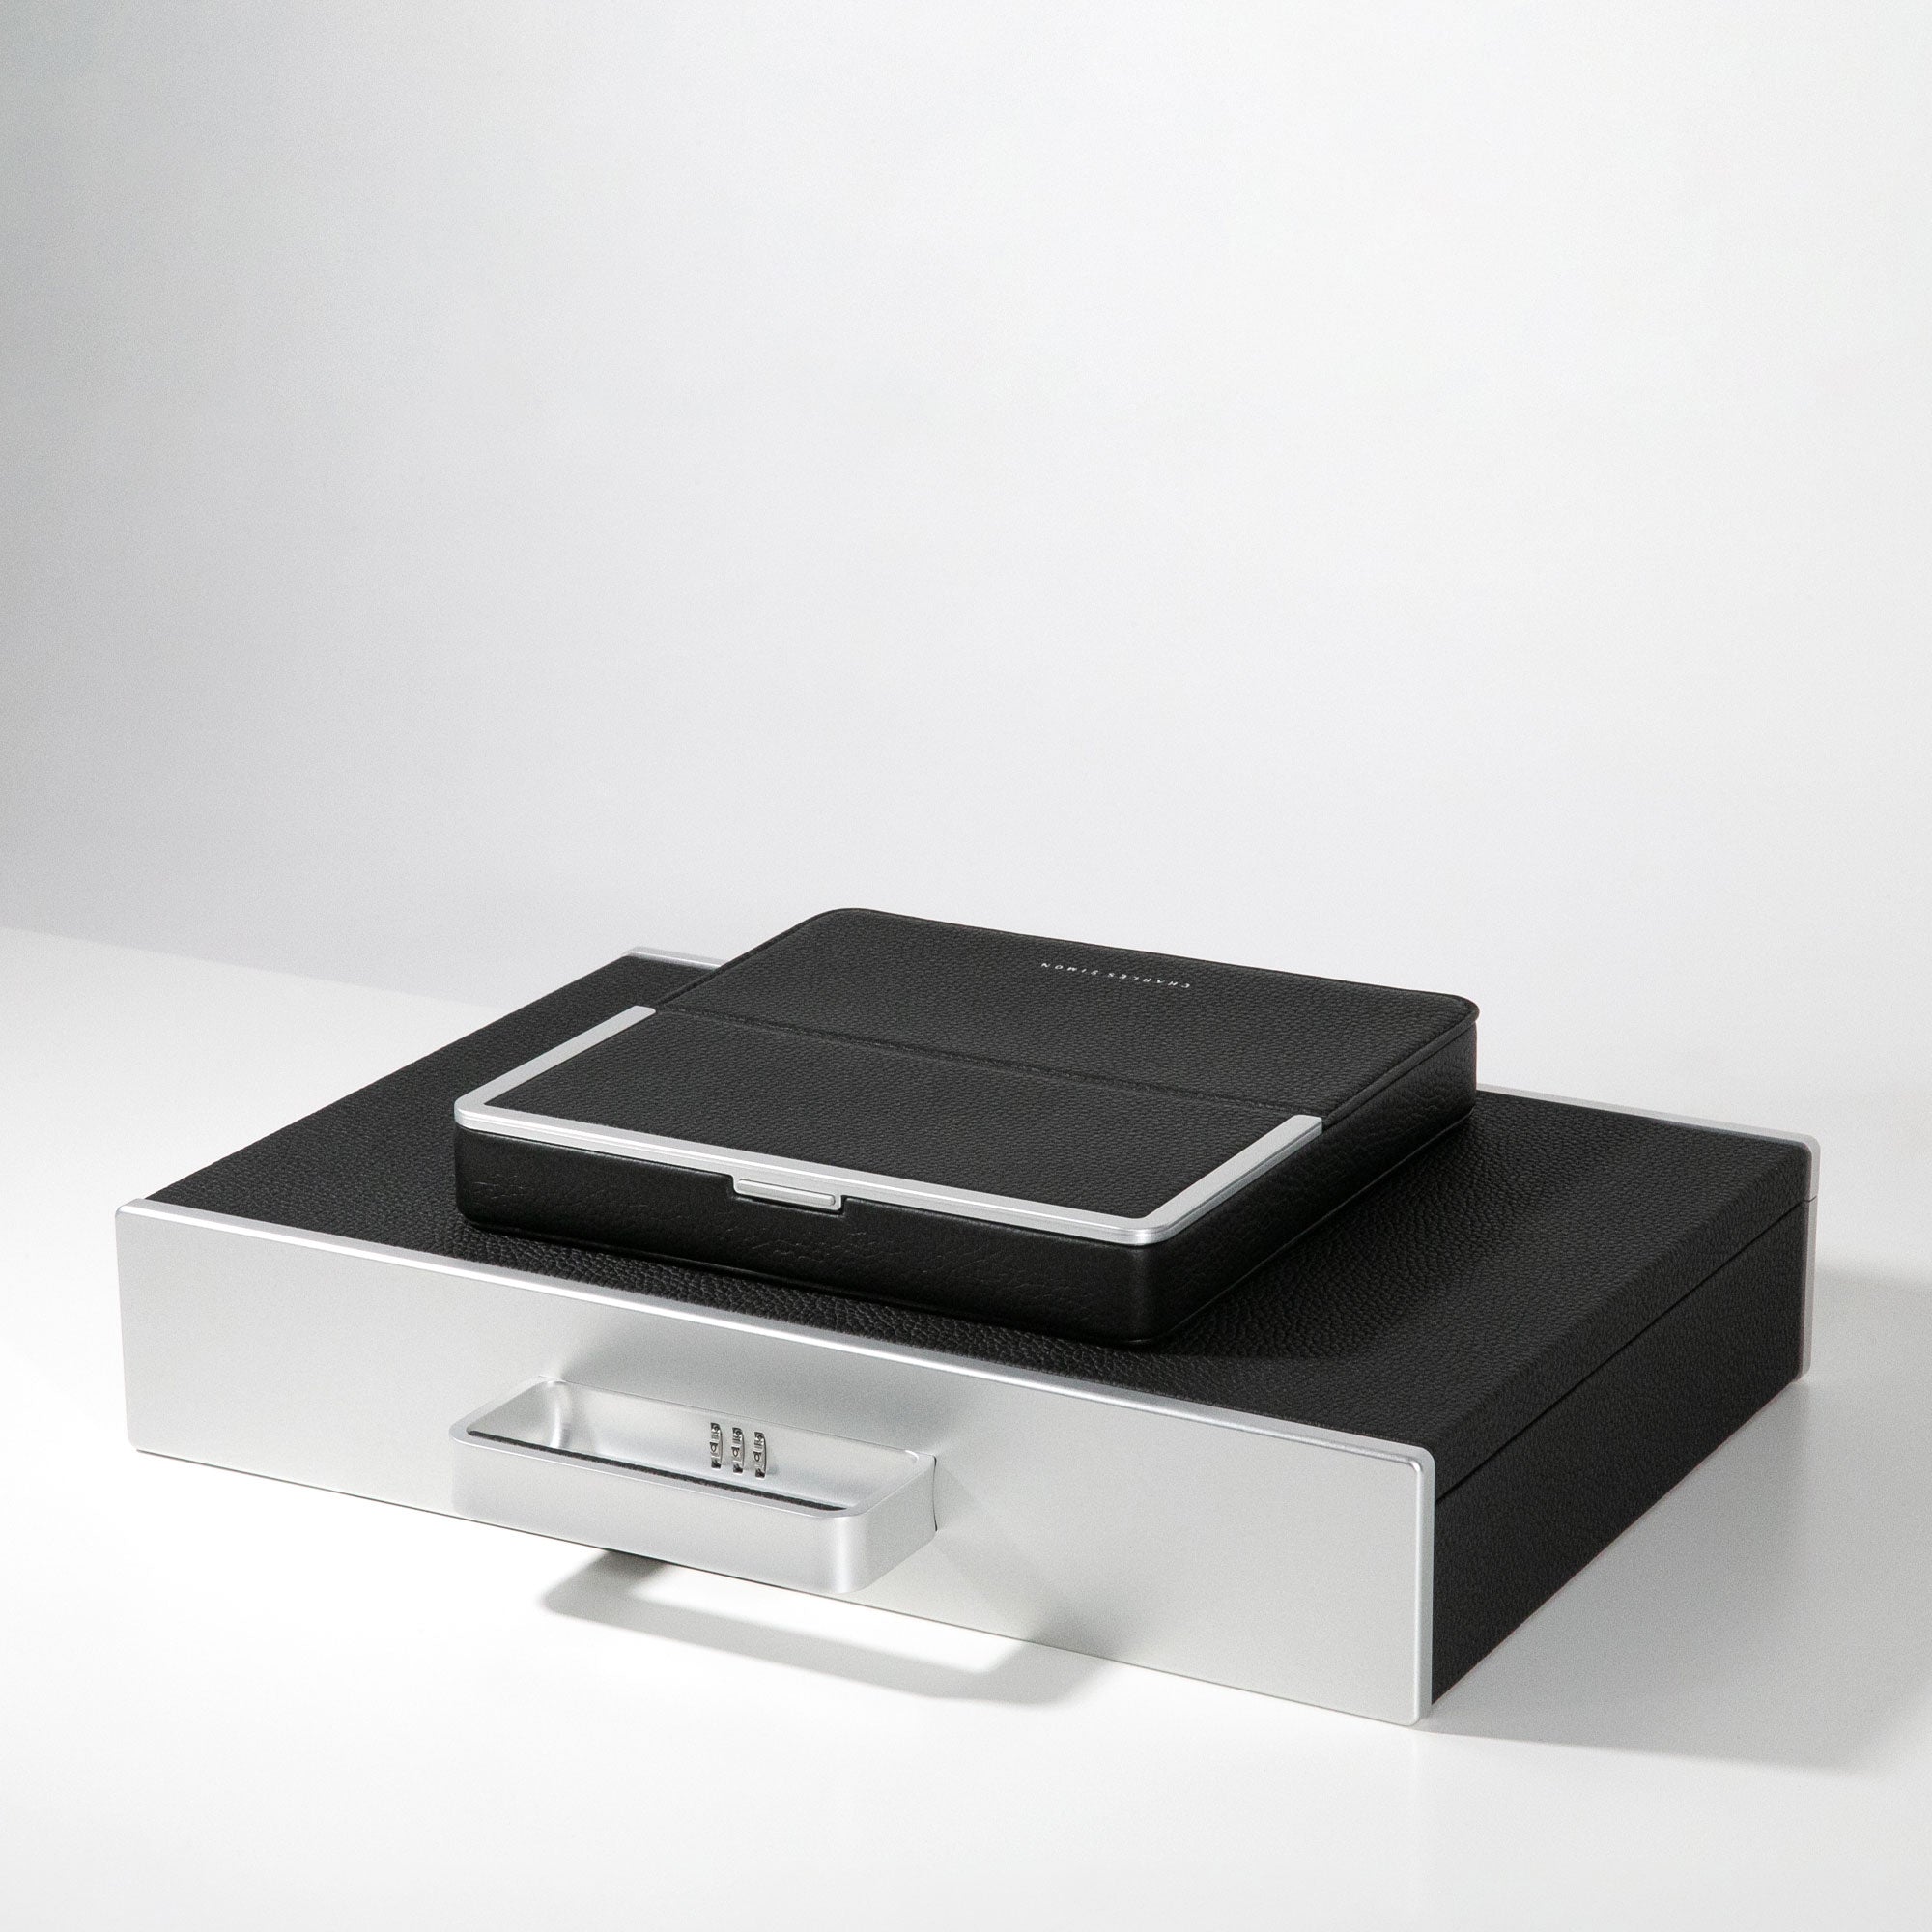 Black leather travel wallet lying on minimalist black briefcase